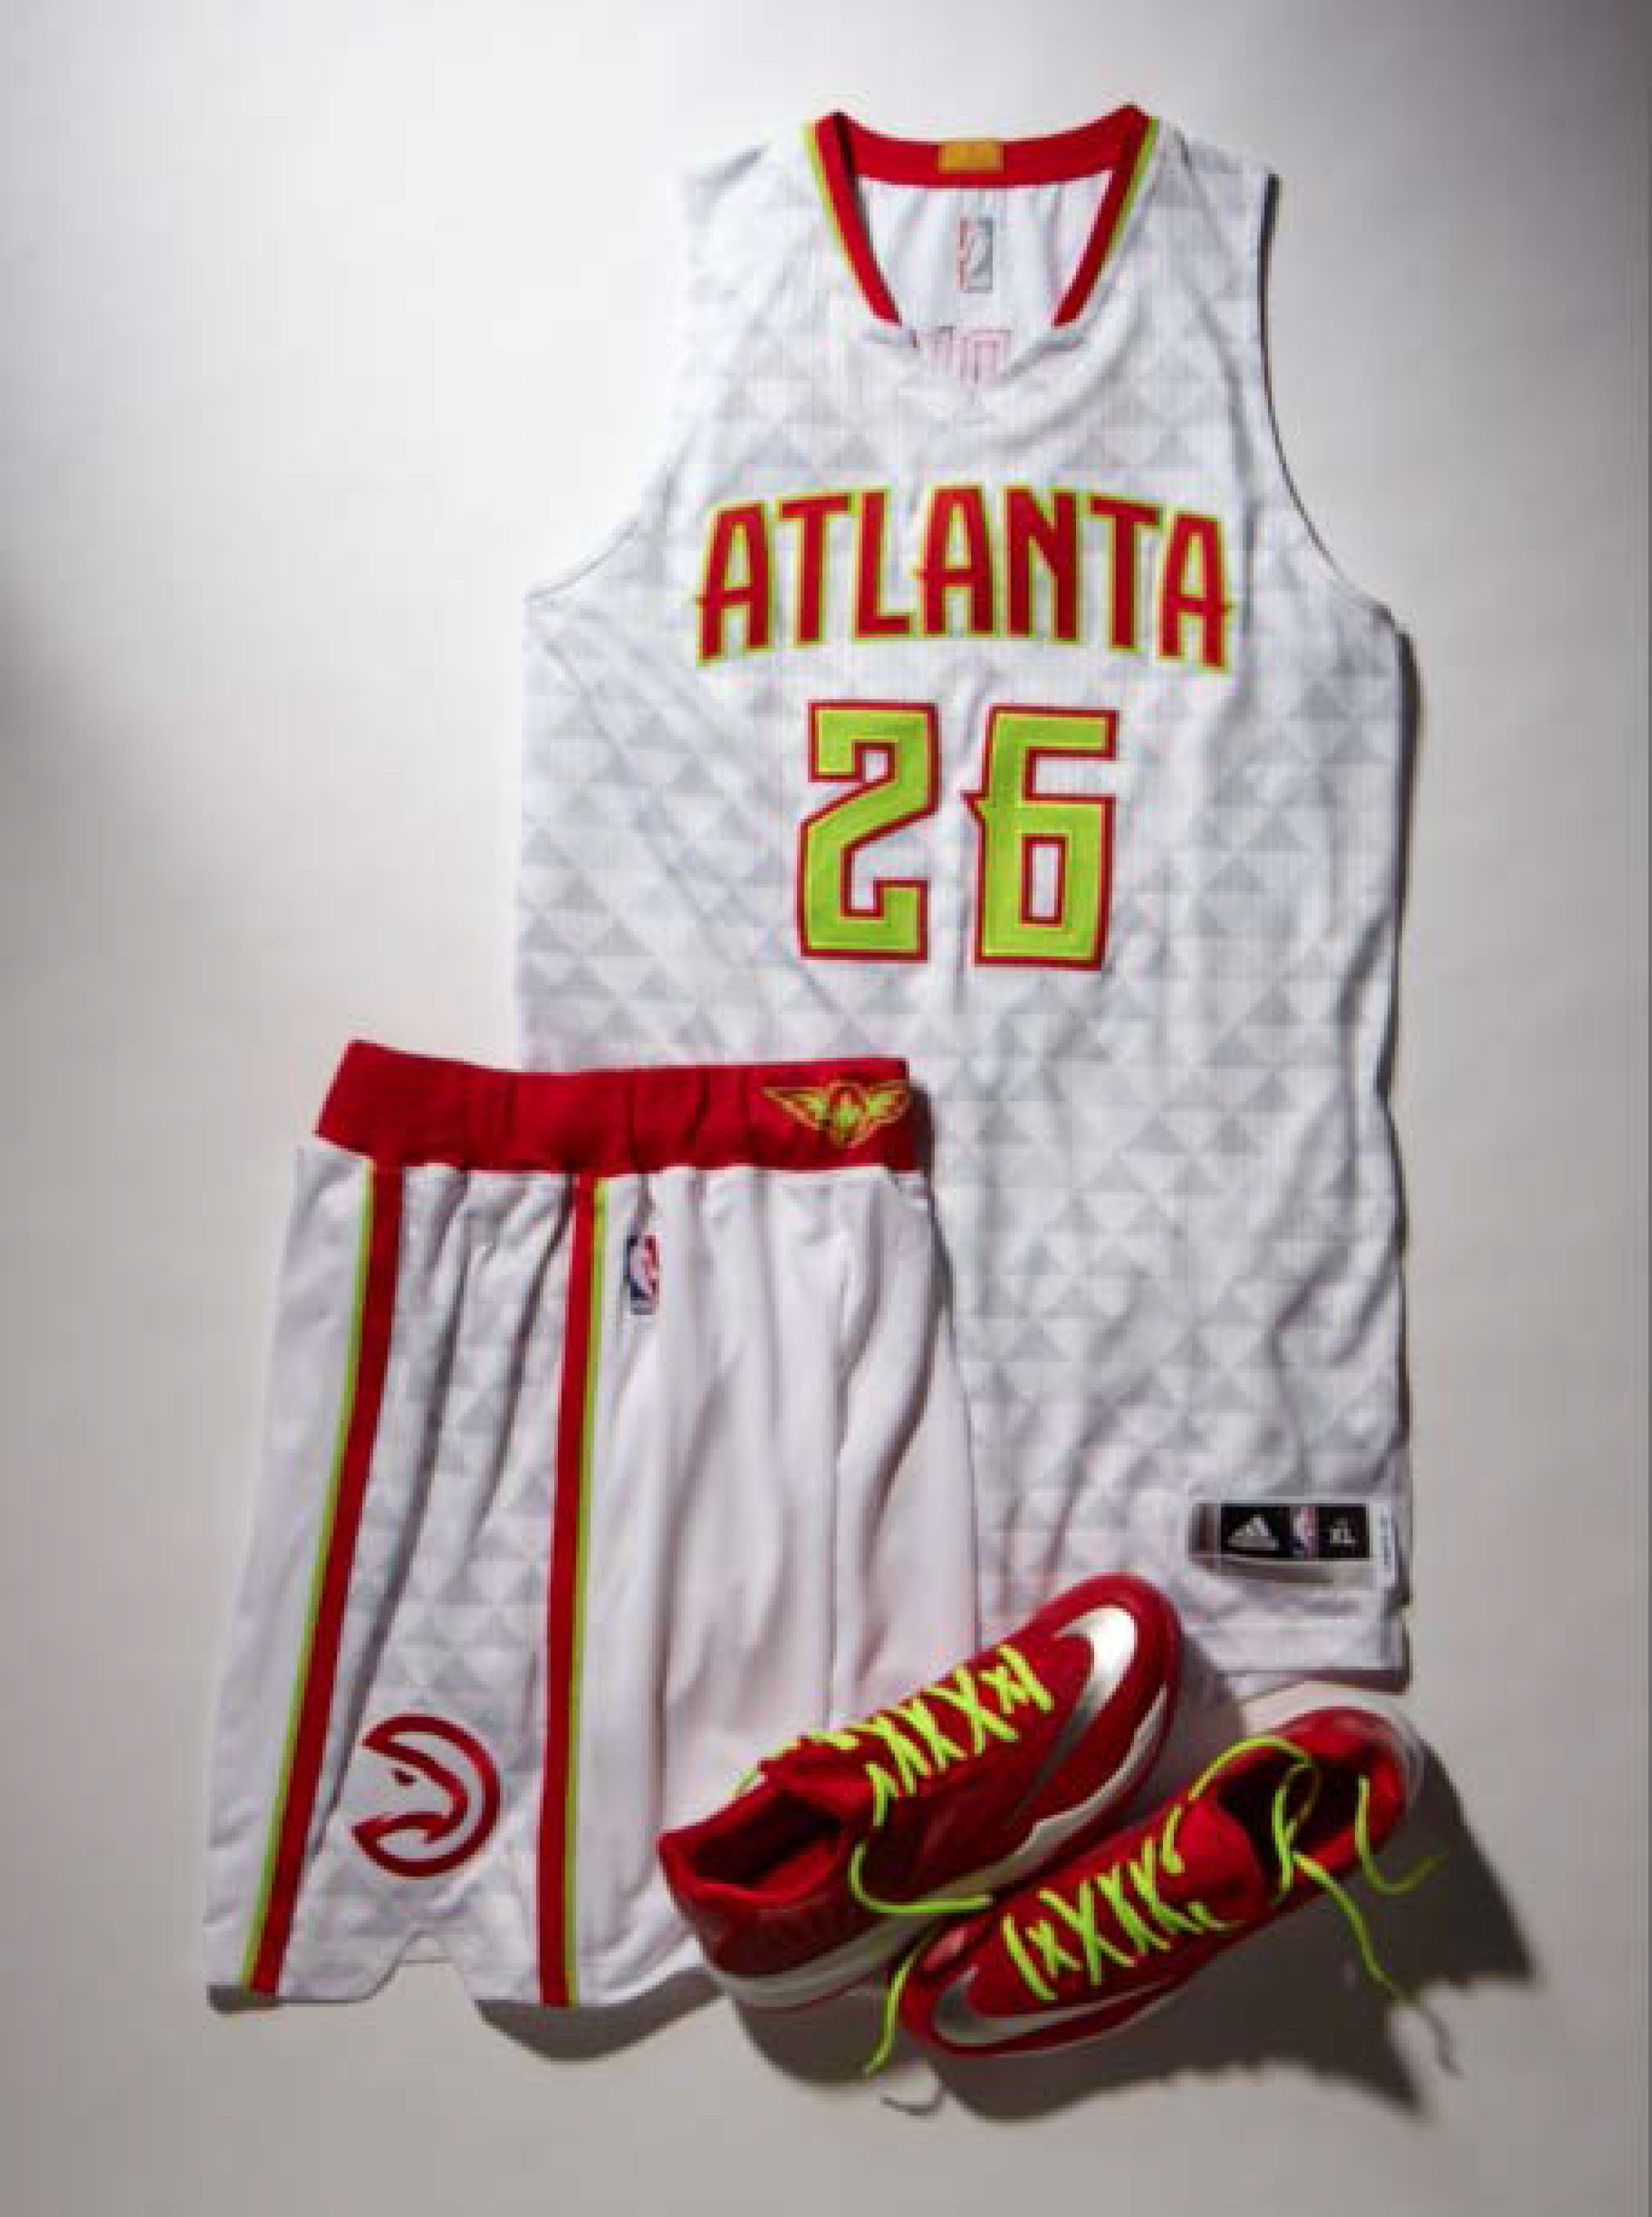 Atlanta Hawks Alternate Uniform - National Basketball Association (NBA) -  Chris Creamer's Sports Logos Page 